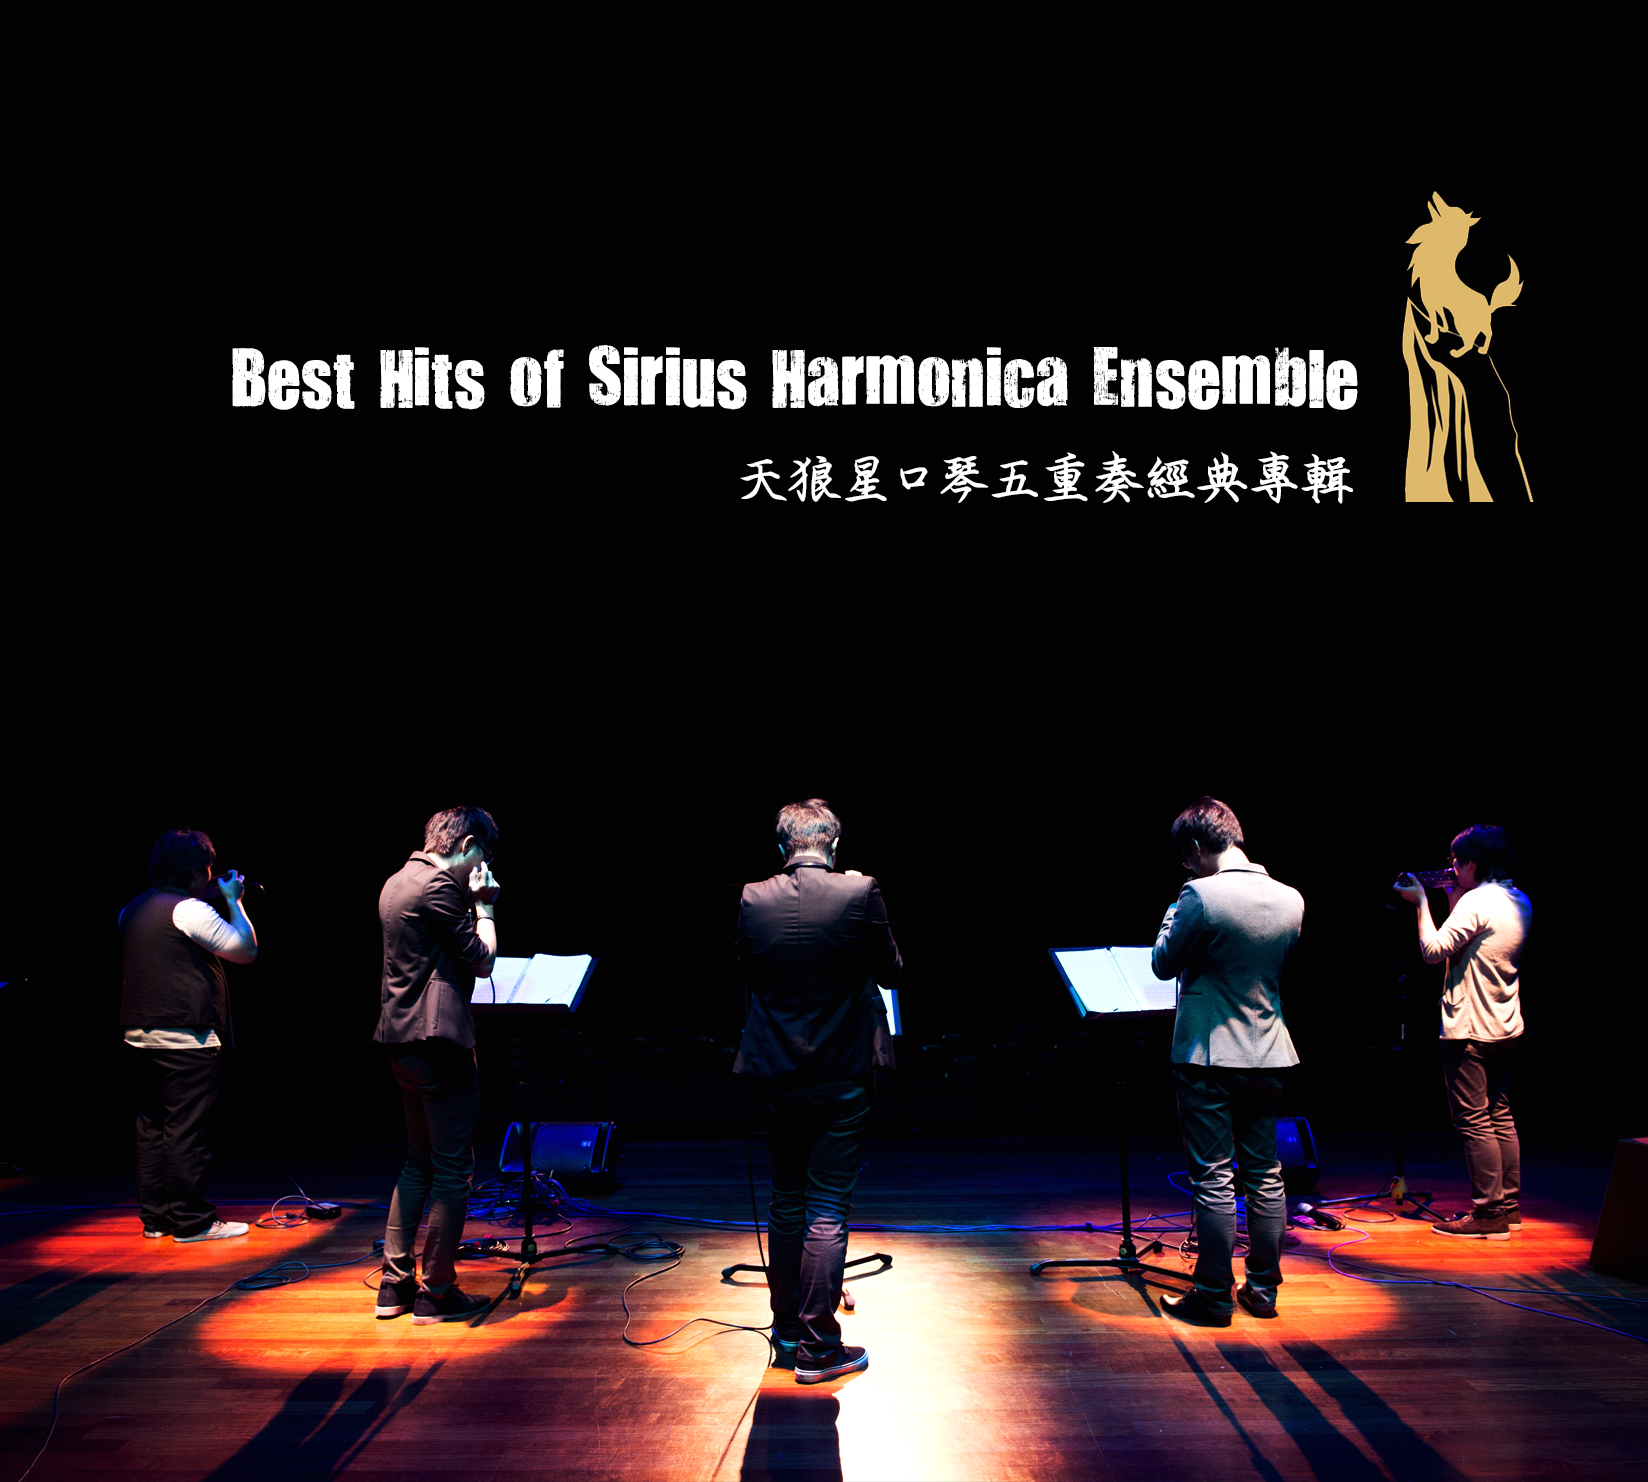 Best Hits of Sirius Harmonica Ensemble